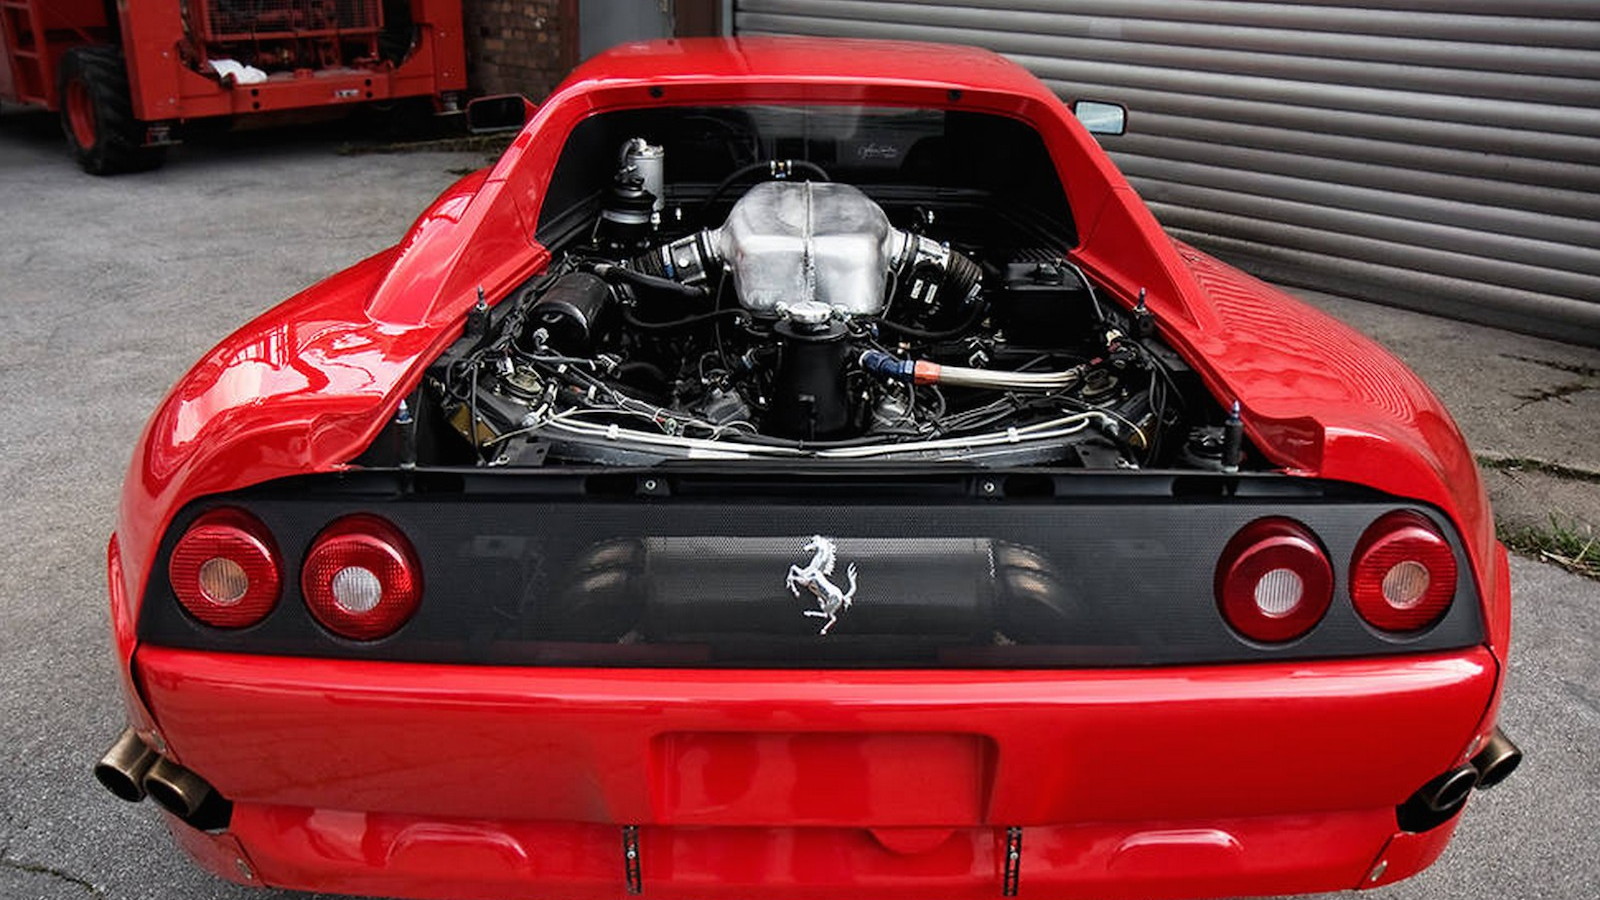 Ferrari Enzo prototype for sale. Photos via Modena Motorsport. 